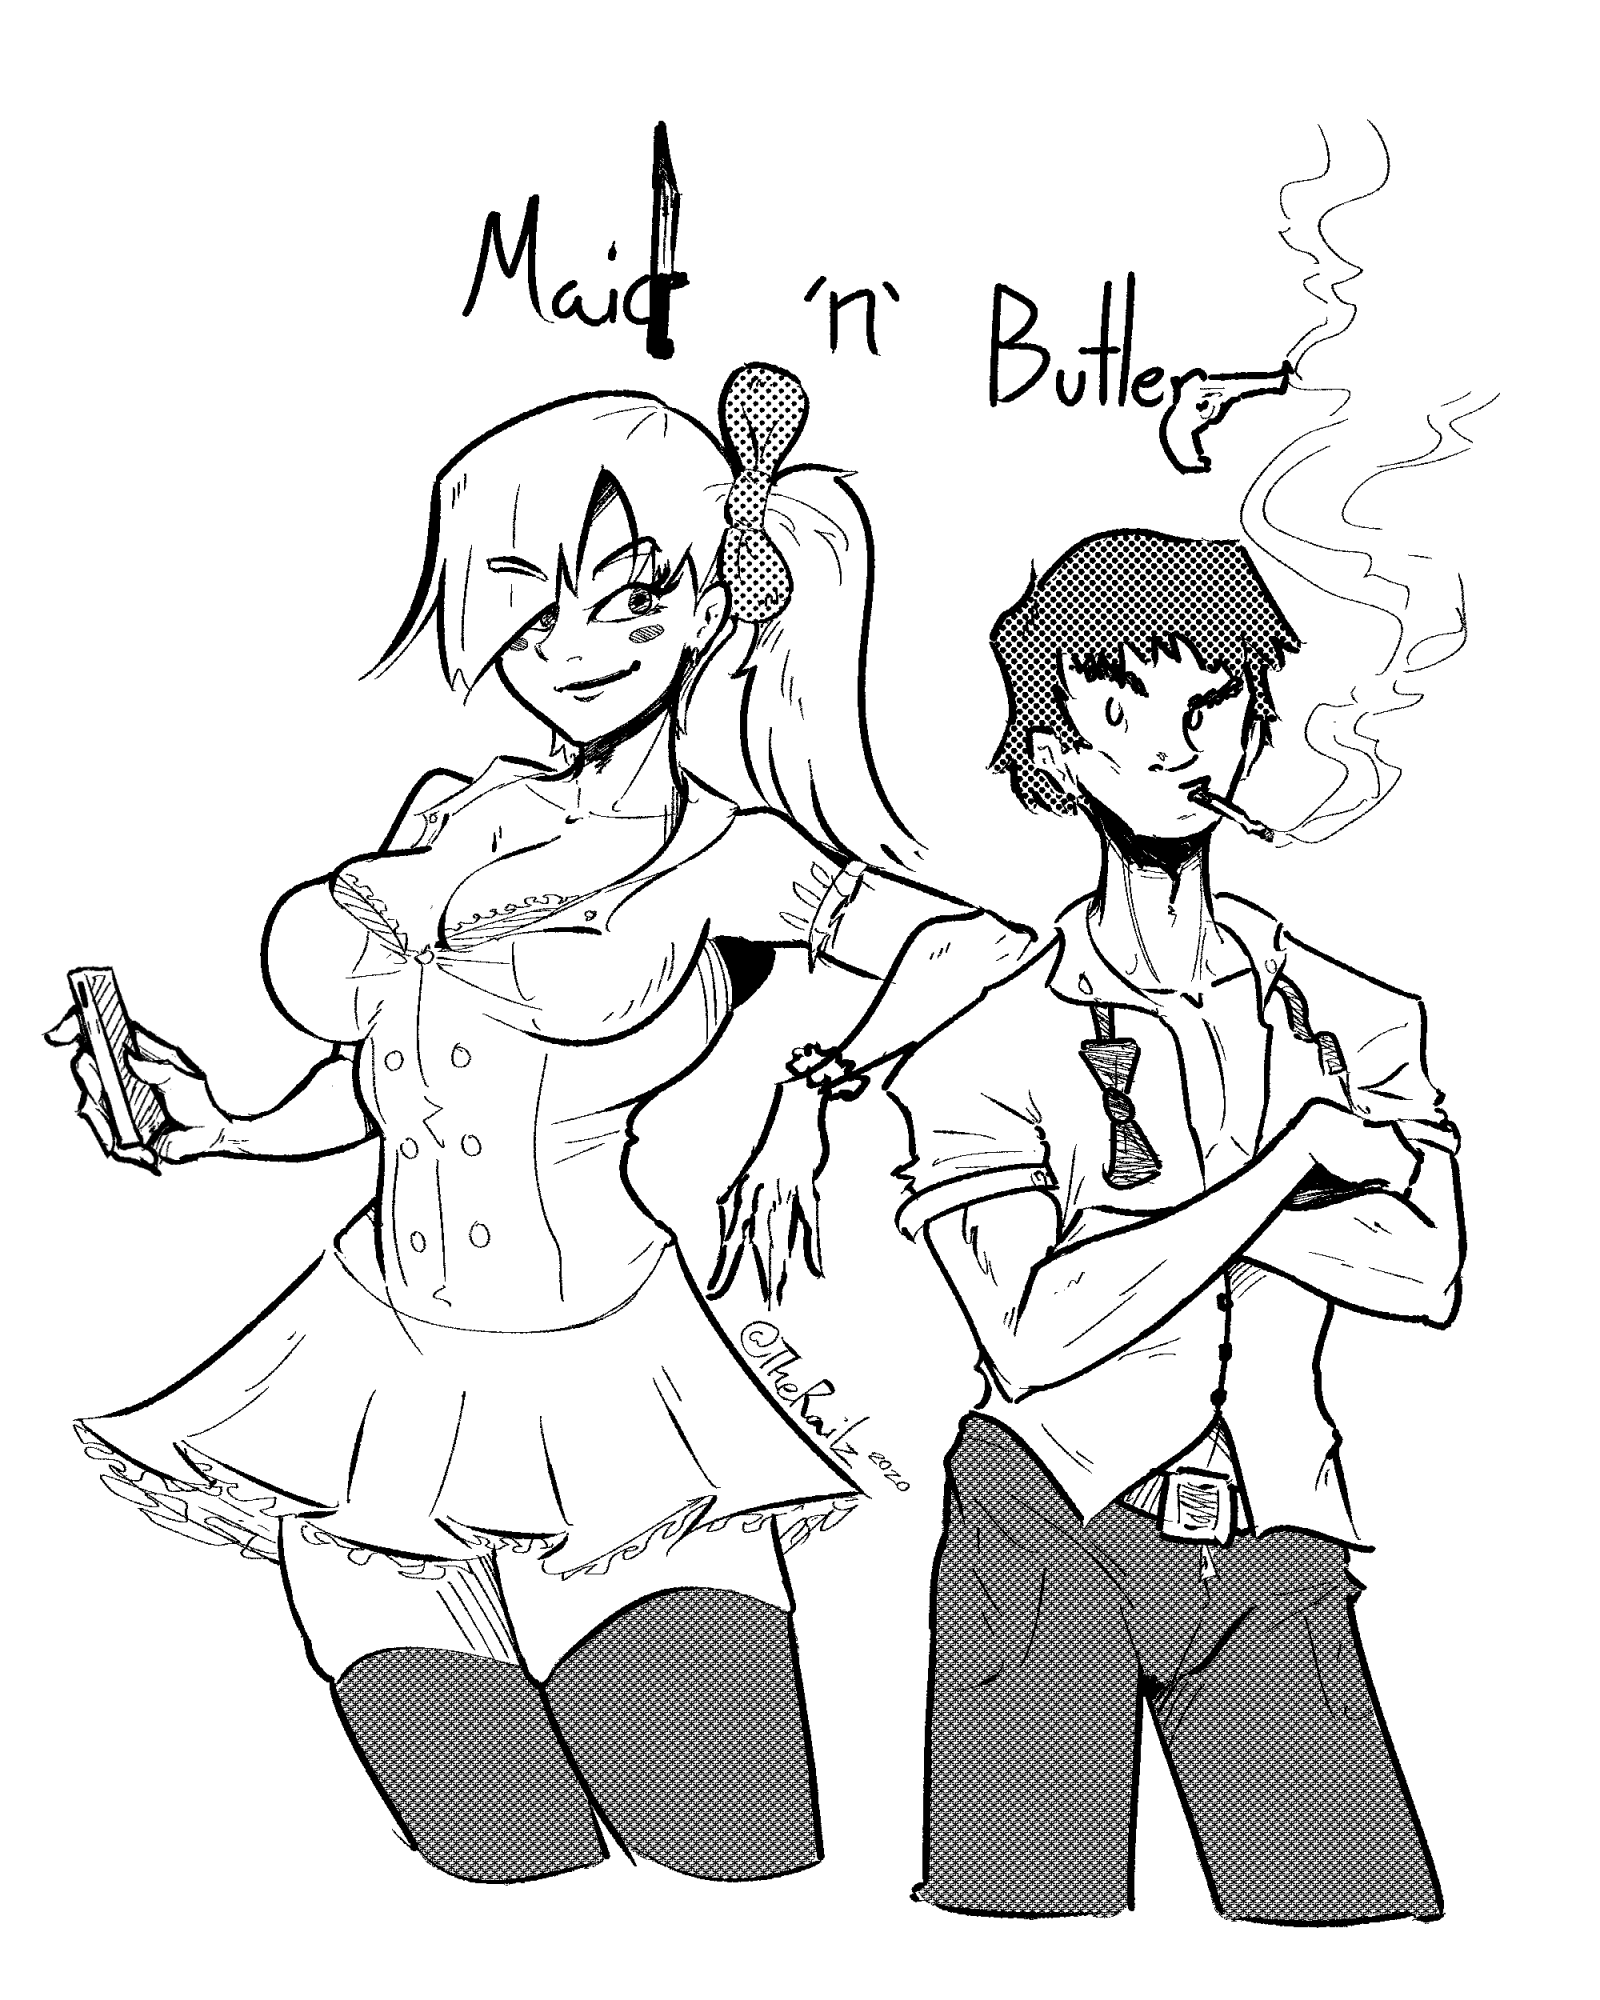 Maid n Butler